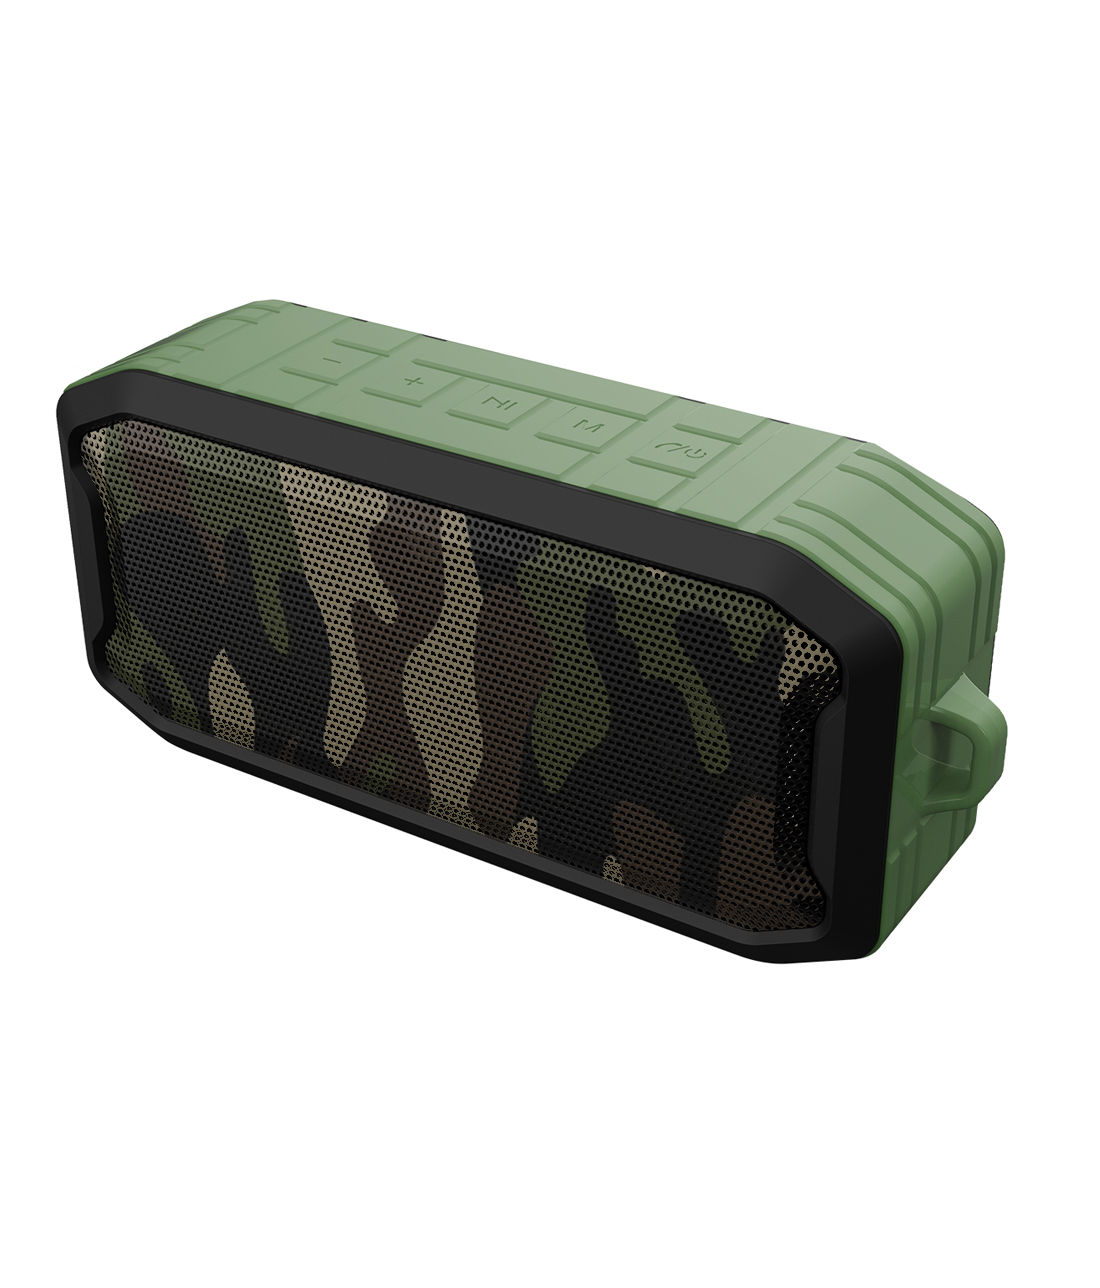 Buy Camo Military - Macmerise Nuke Bluetooth Speaker Speakers Online